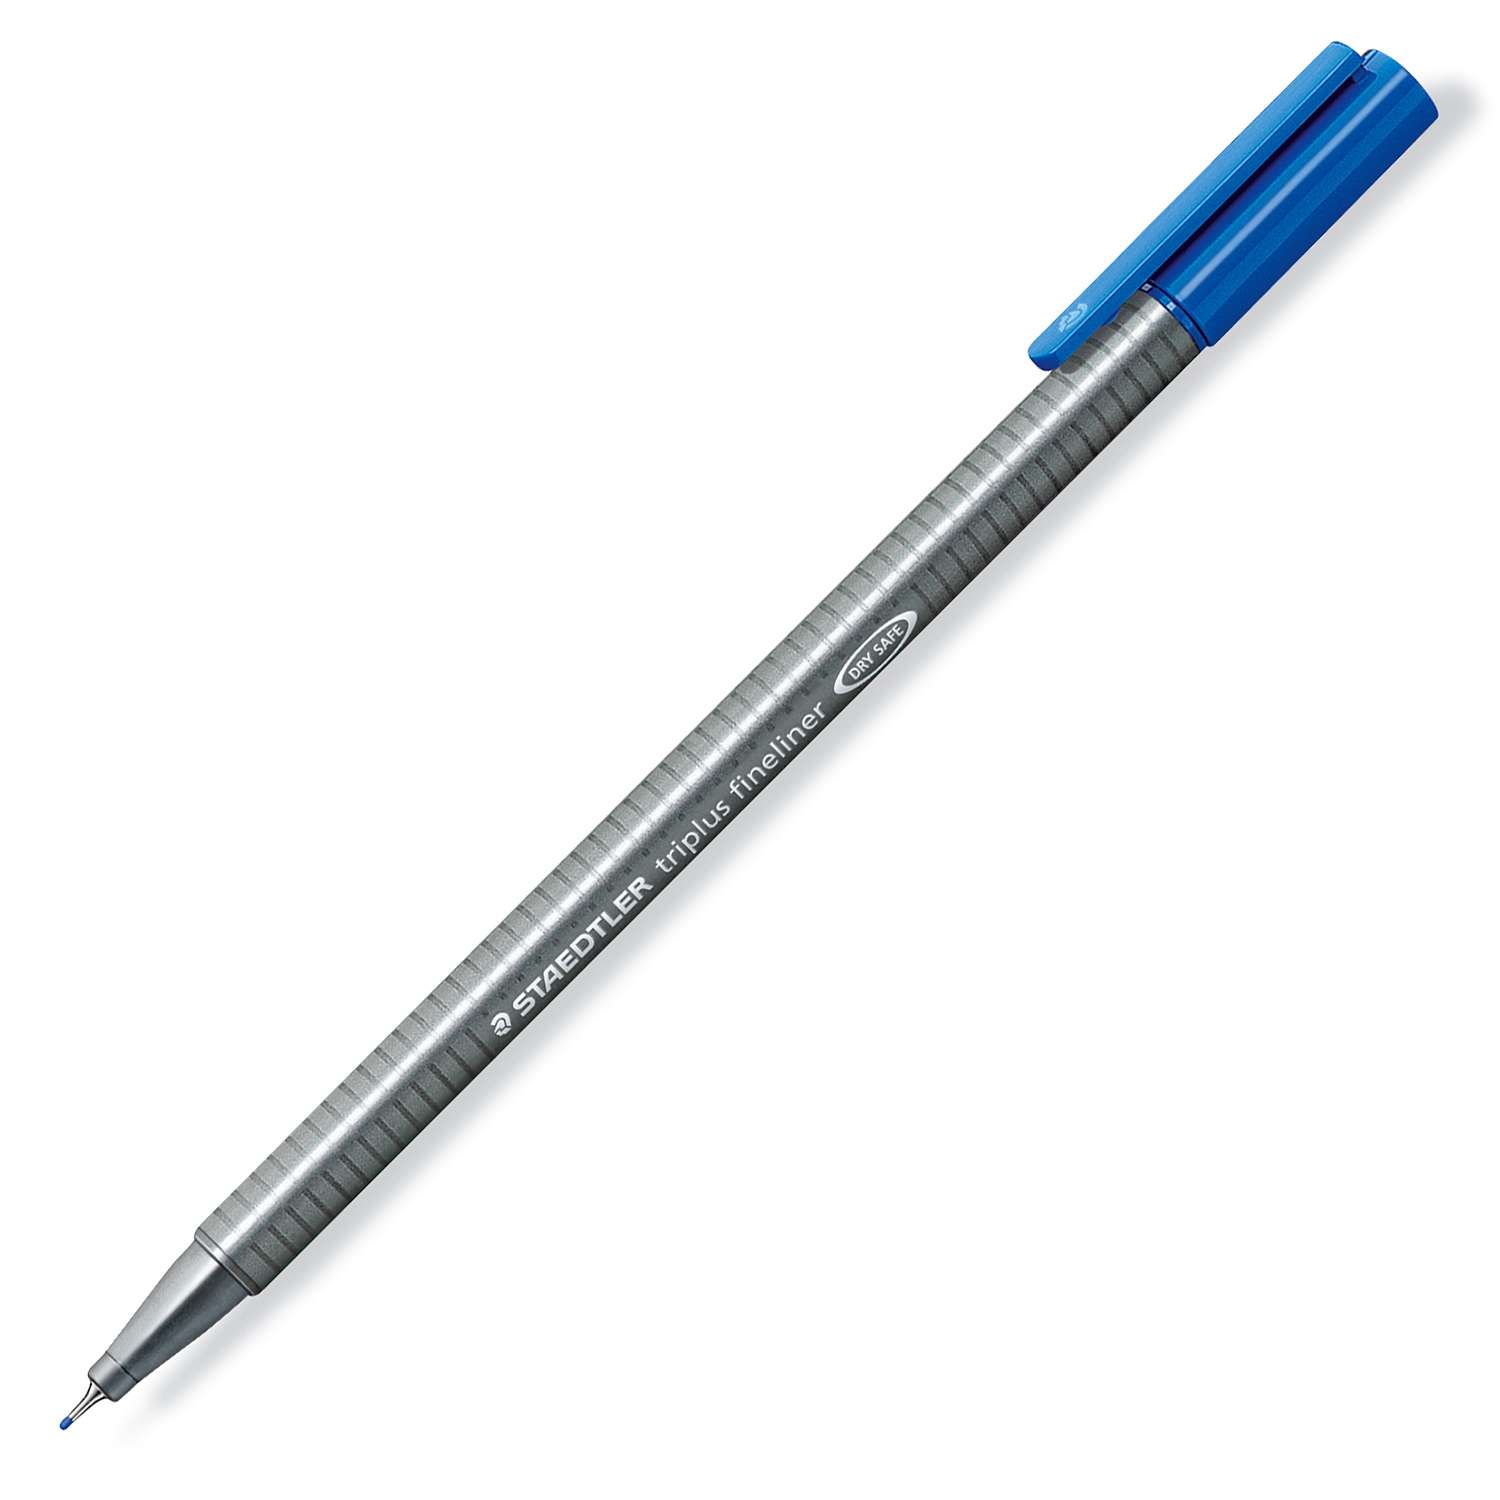 Ручка капиллярная Staedtler Triplus трехгранная Голубая - фото 1